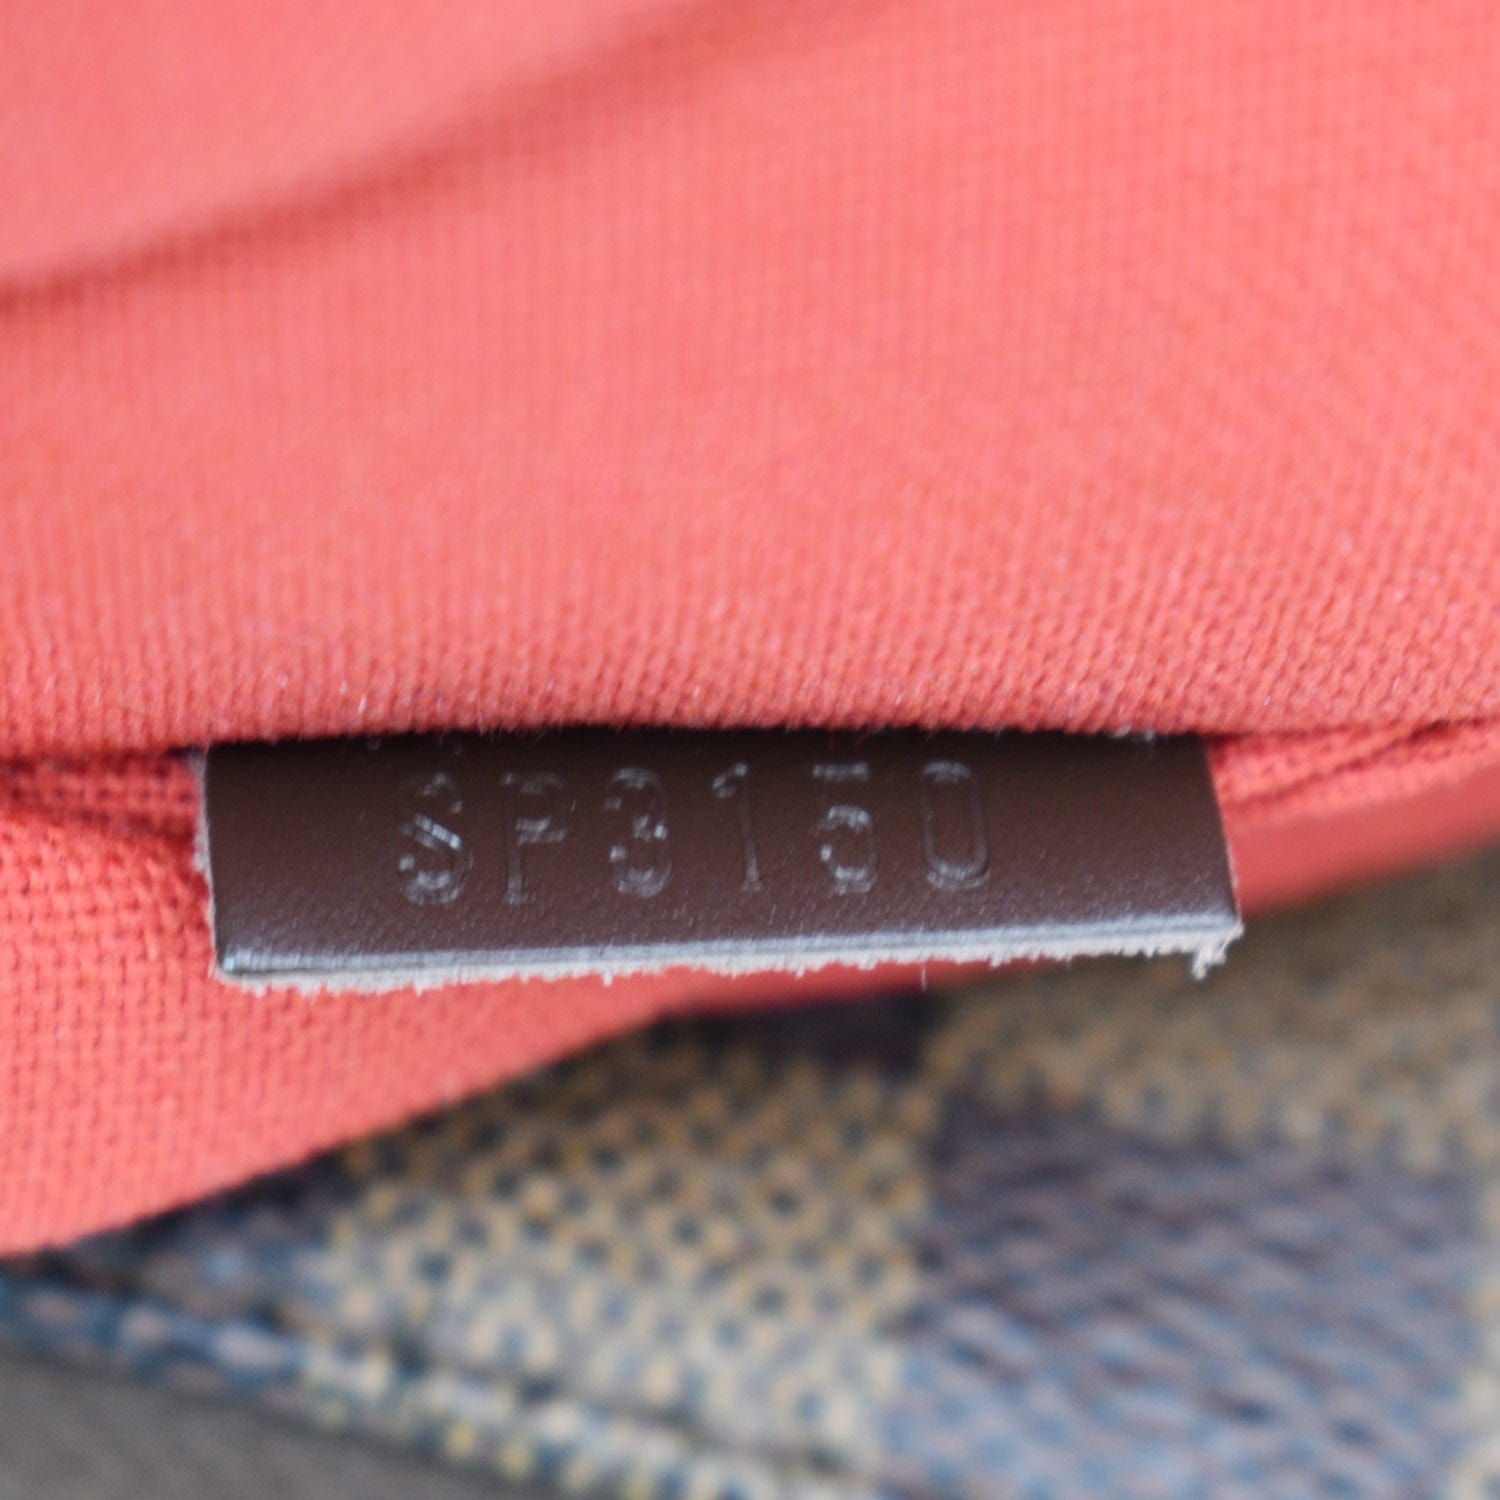 Louis Vuitton - Blue, Green & Red Colorblock Epi Convertible Crossbody –  Current Boutique